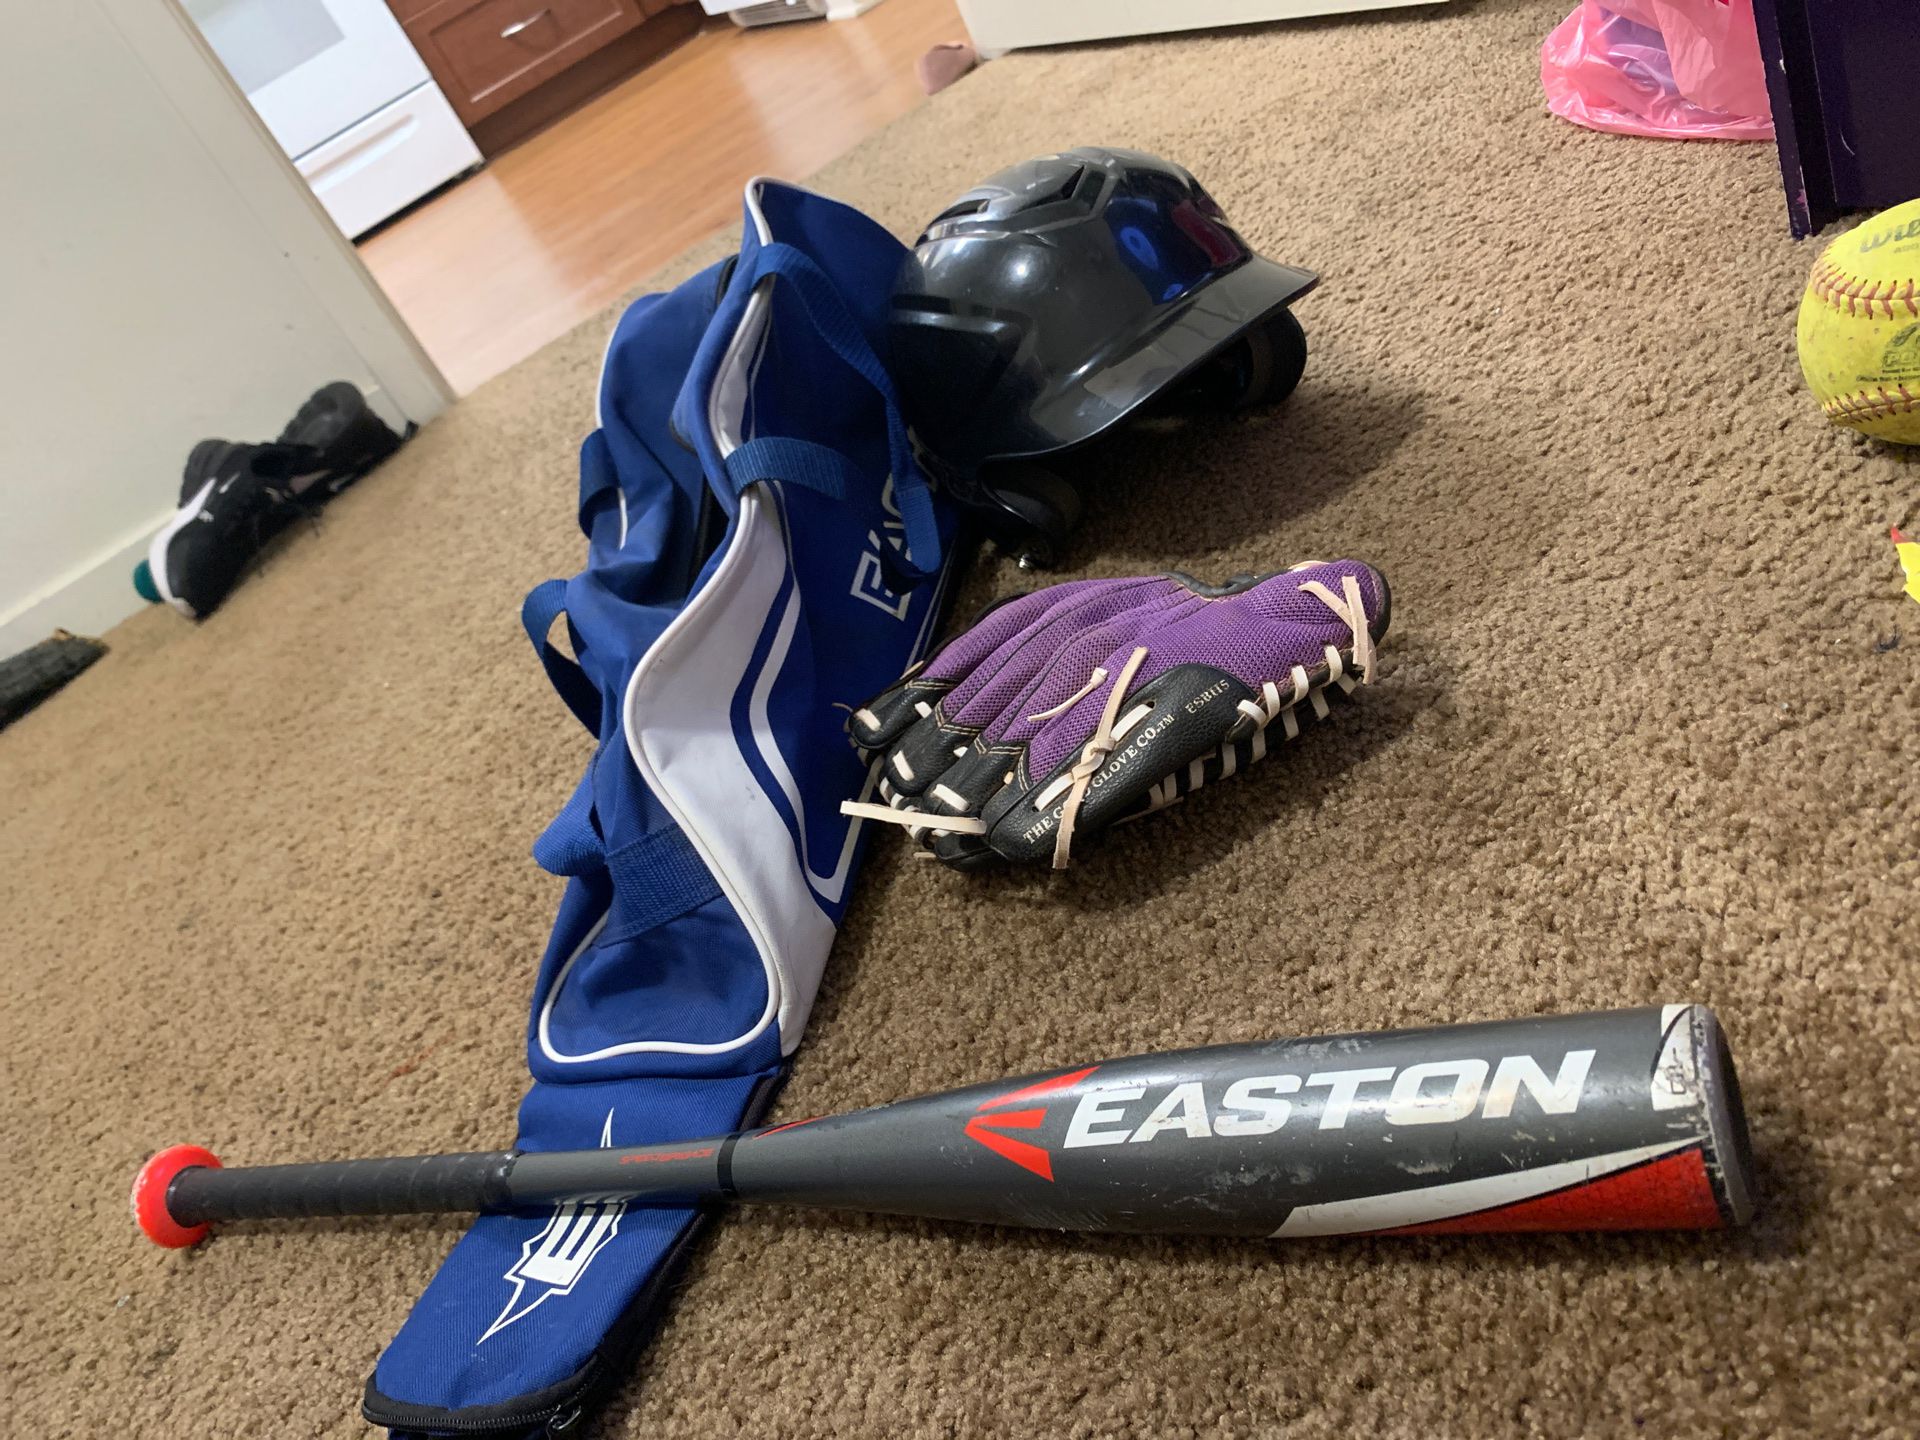 Baseball/softball equipment